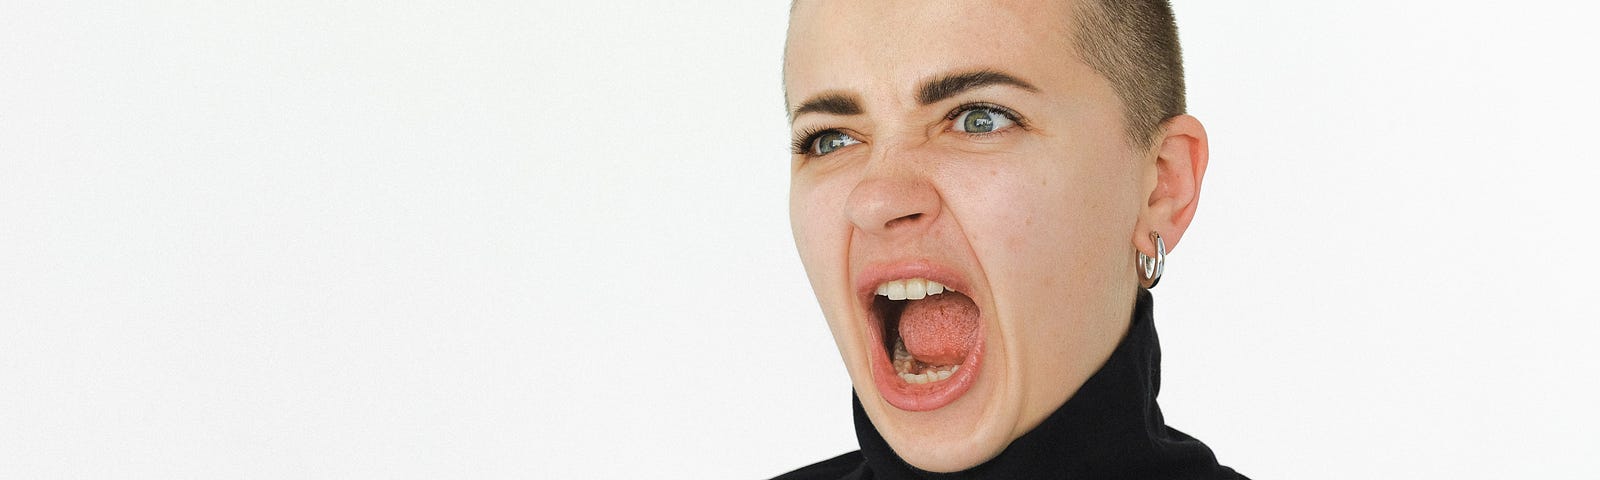 Woman In Black Turtleneck Shirt Yelling